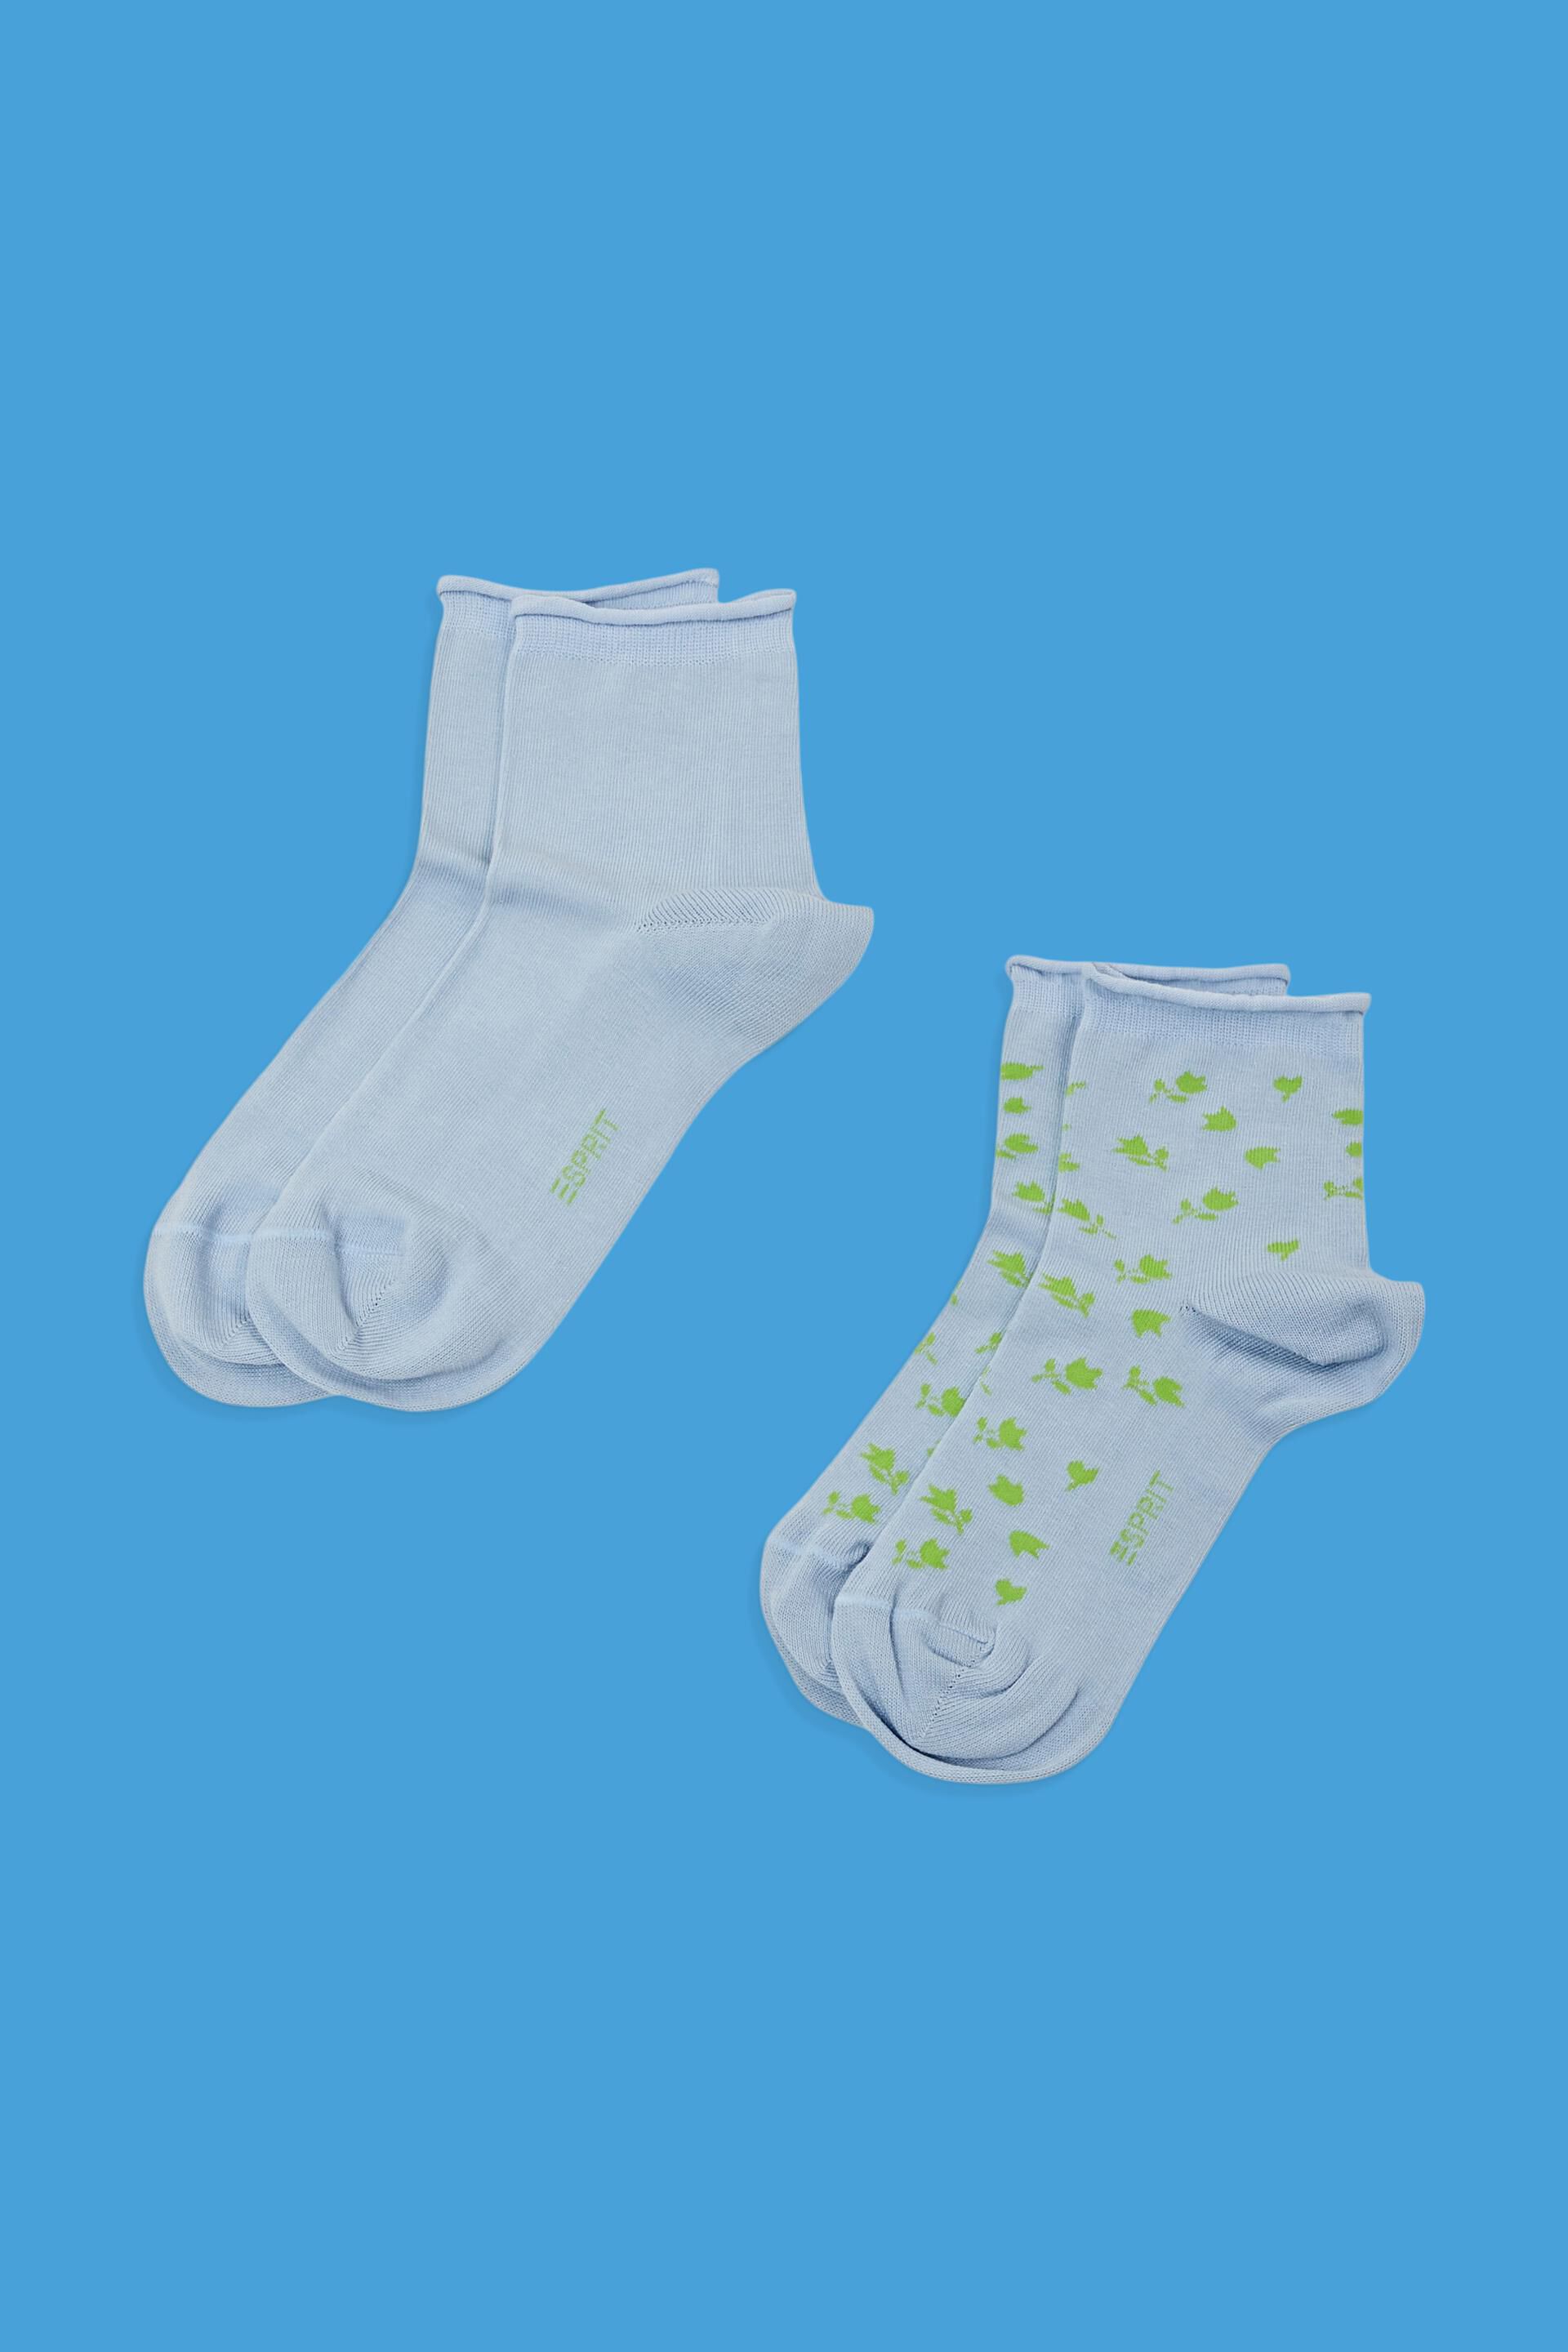 Esprit of pattern floral socks short 2-pack with